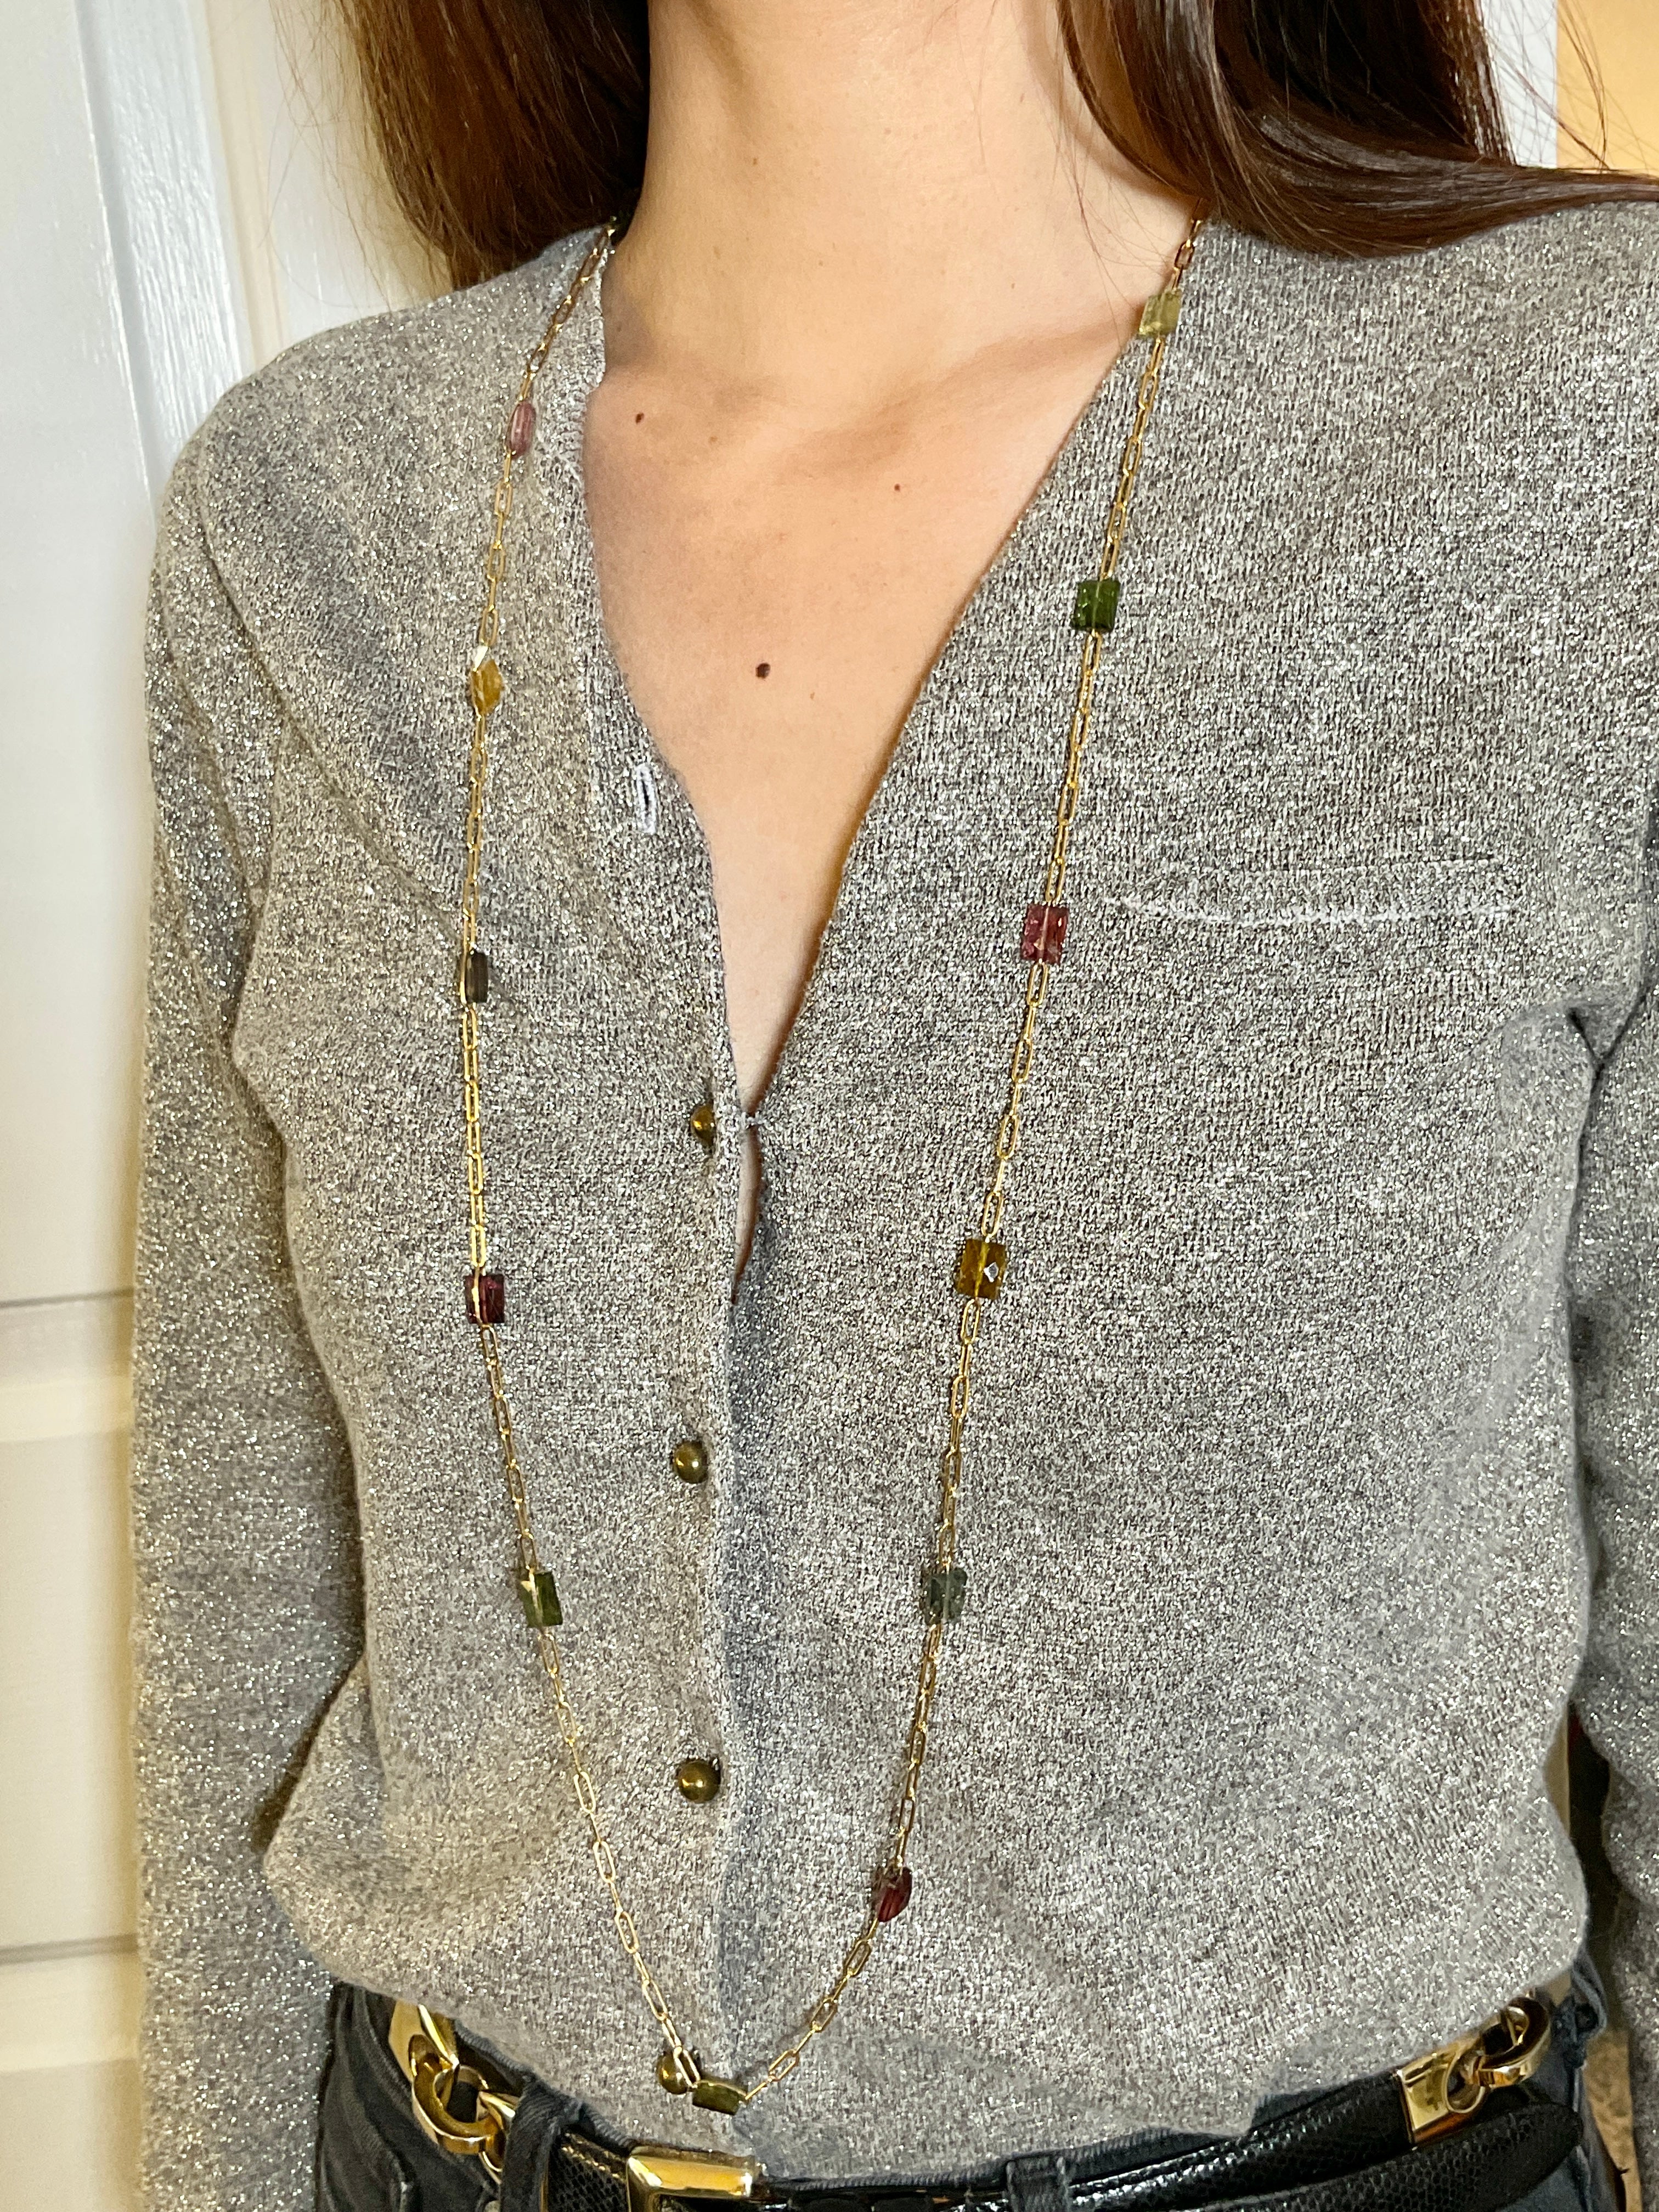 Emma Rainbow Tourmaline Paperclip Long Necklace